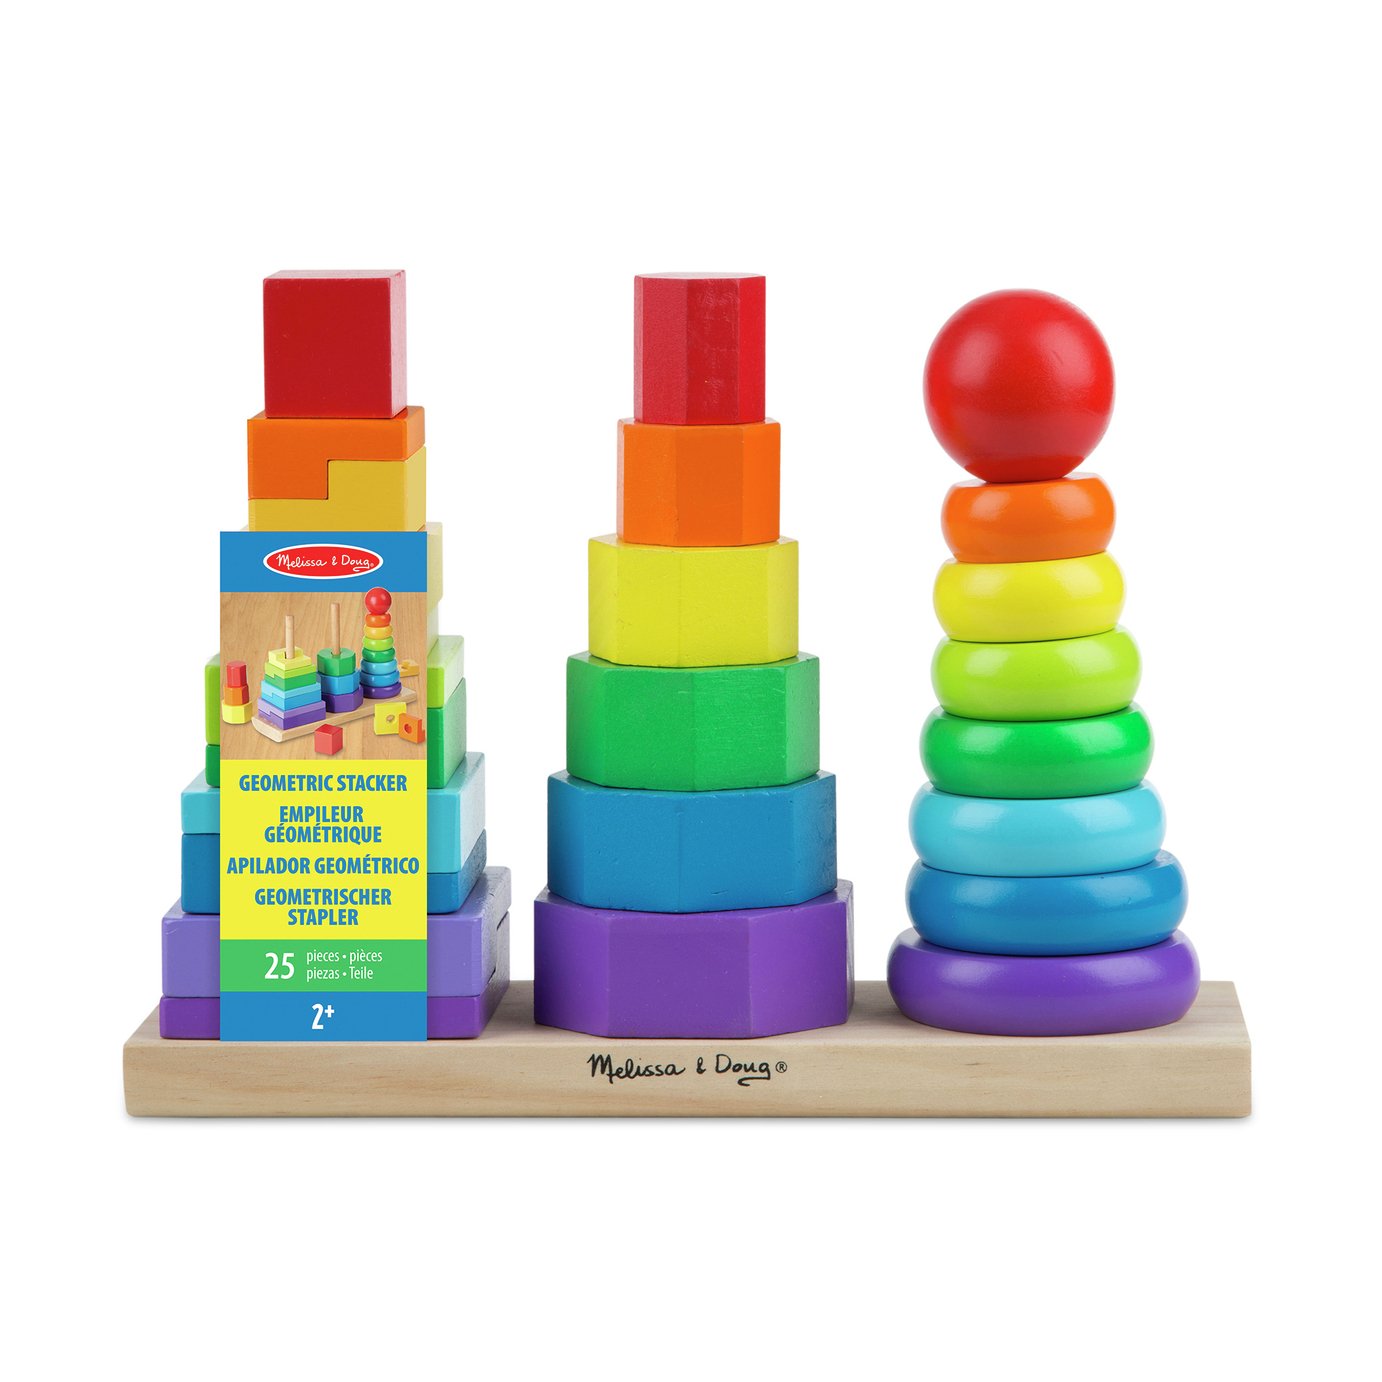 melissa & doug geometric stacker toddler toy